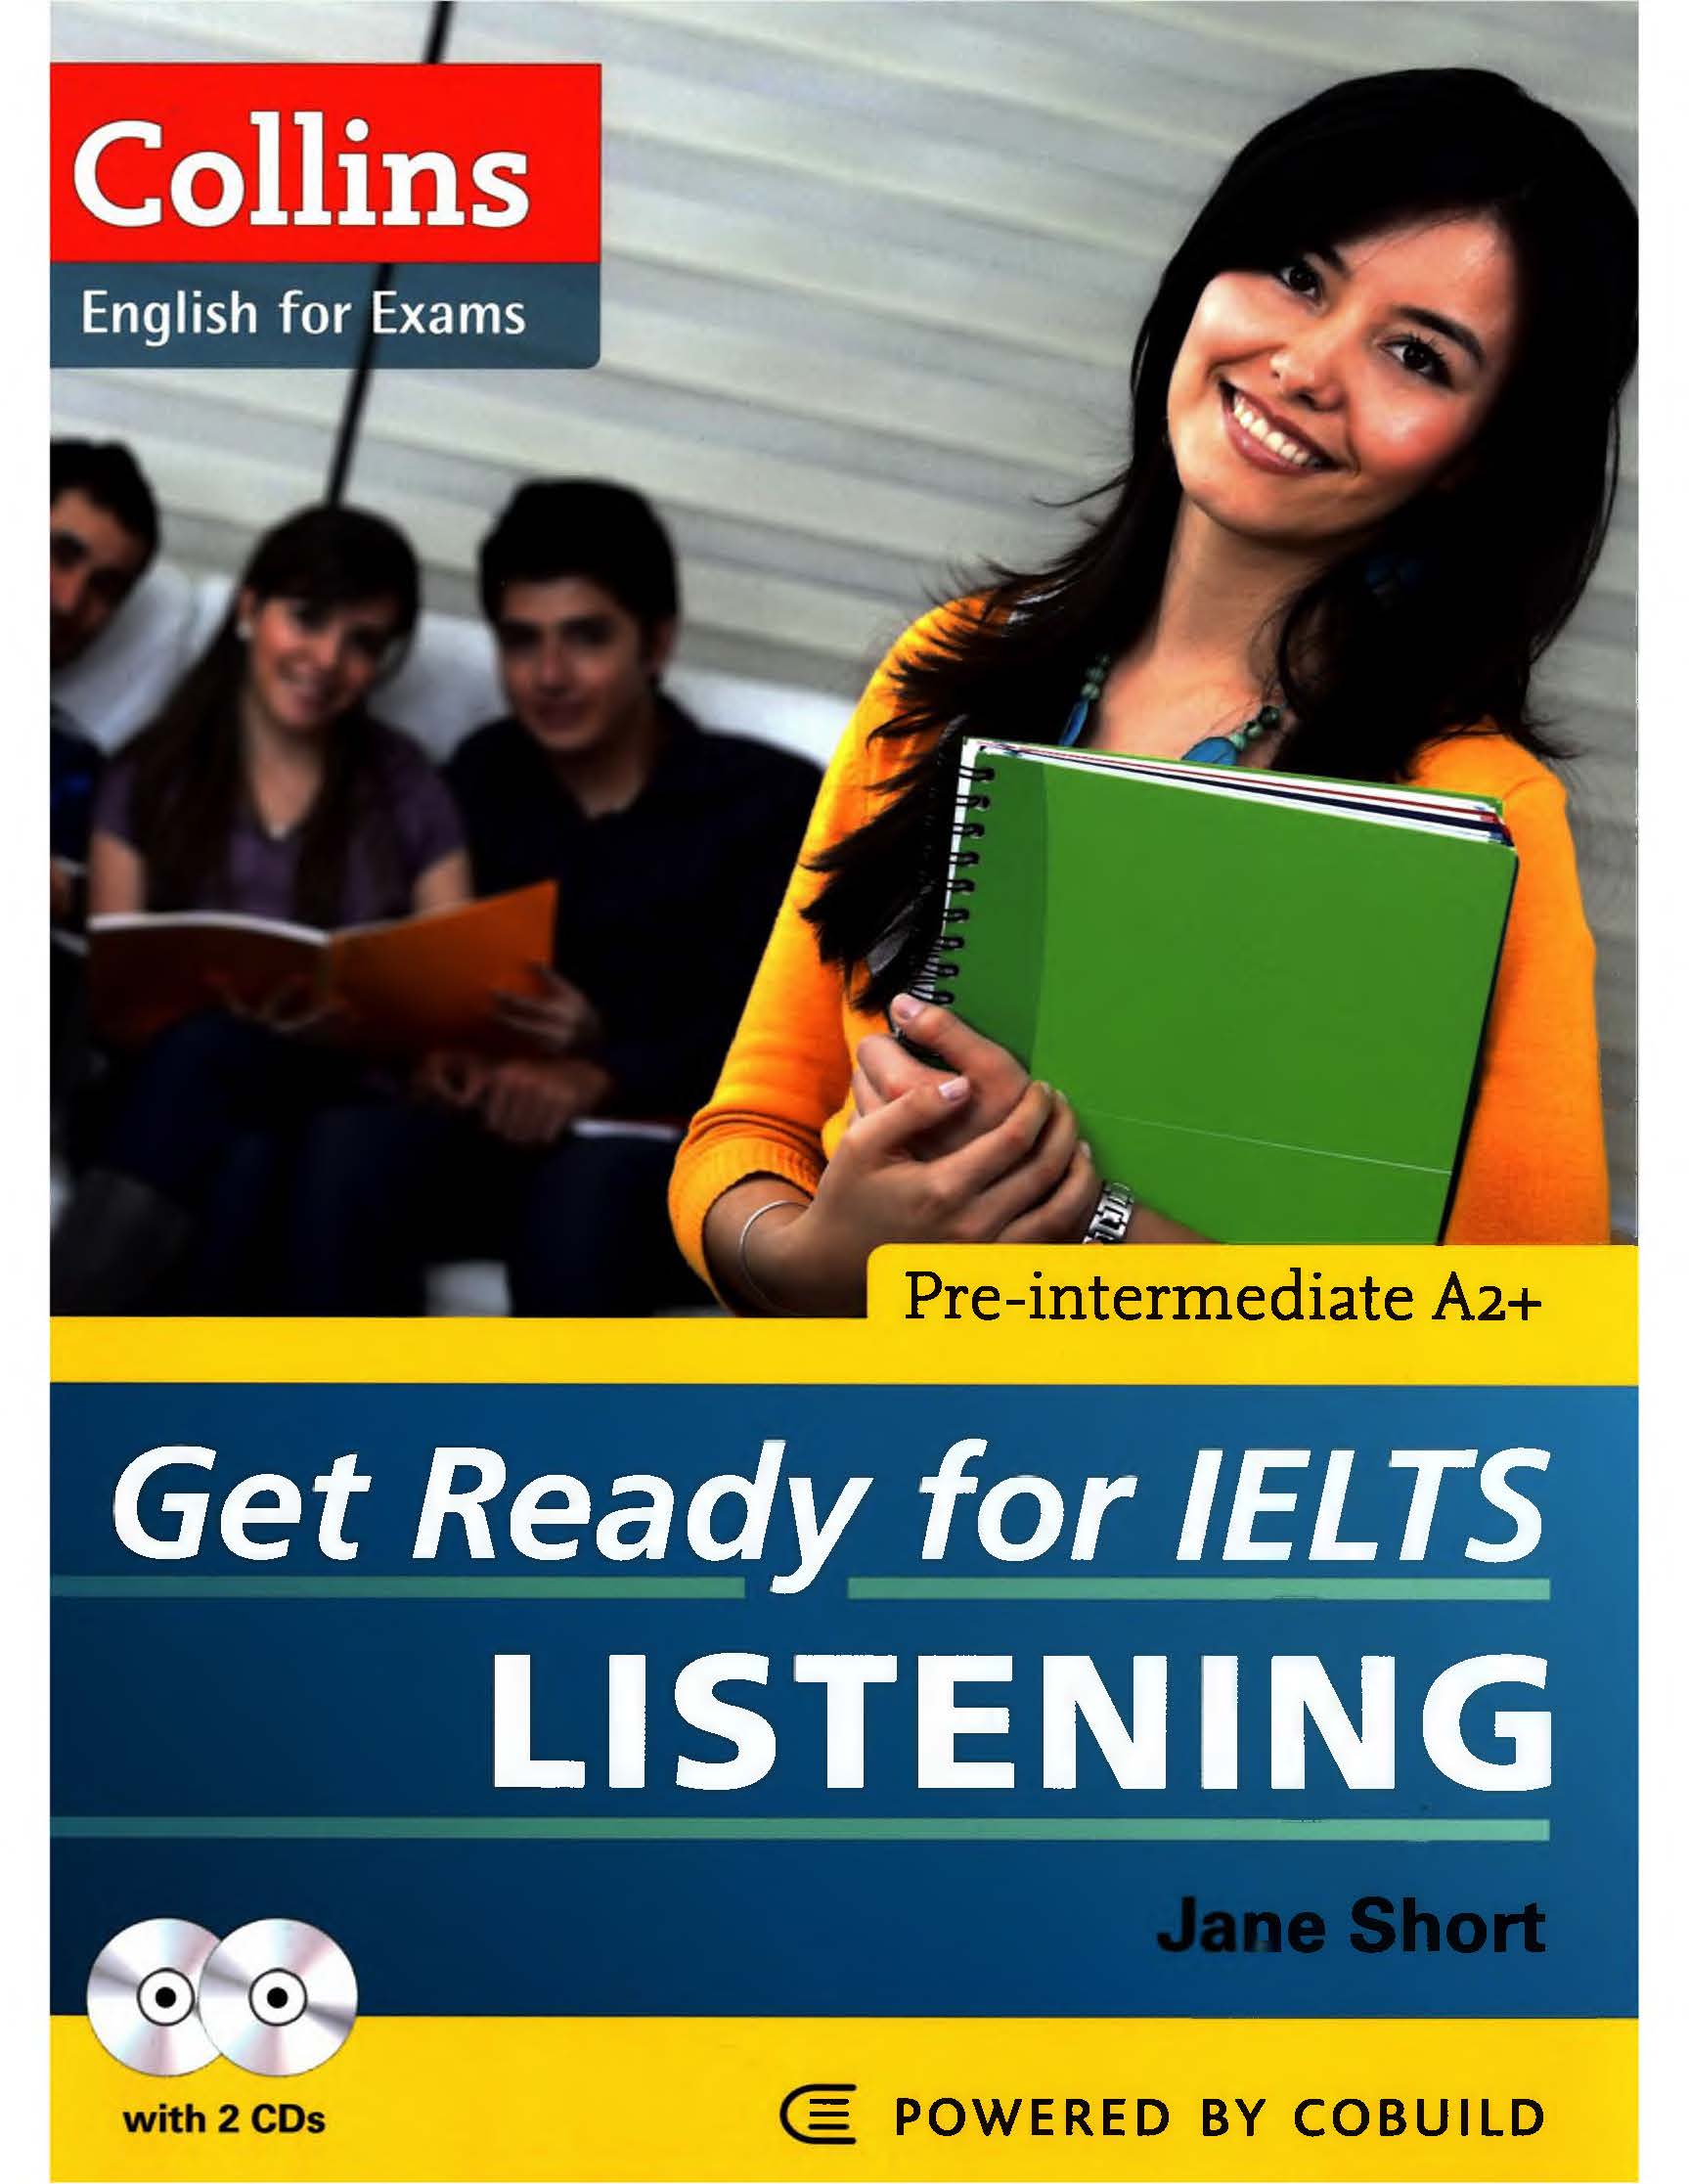 Bìa cuốn sách "Get ready for IELTS Listening"